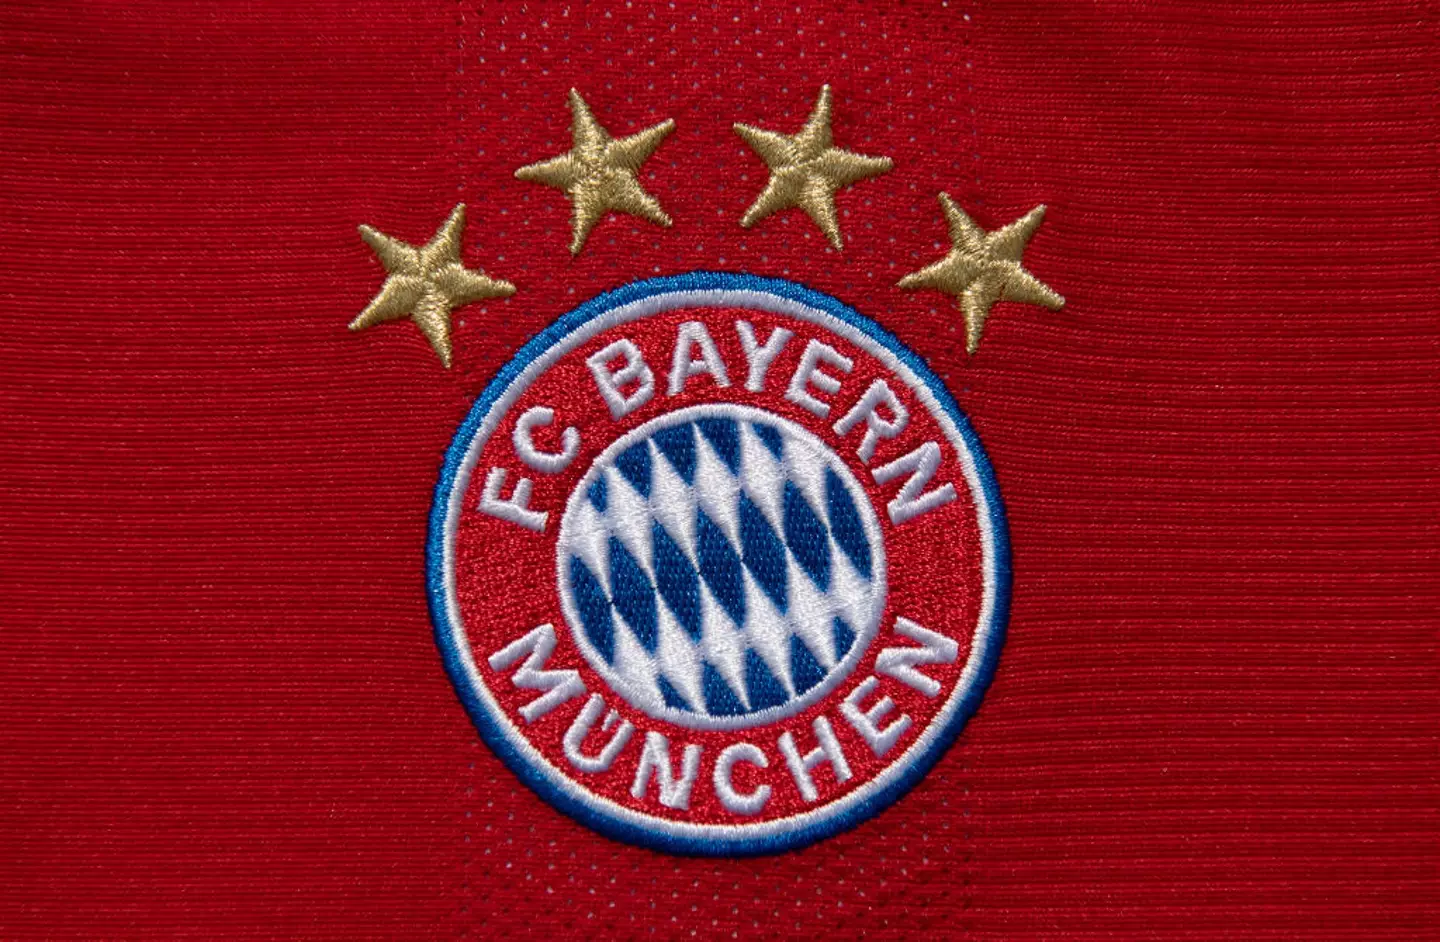 Bayern Munich's current badge (